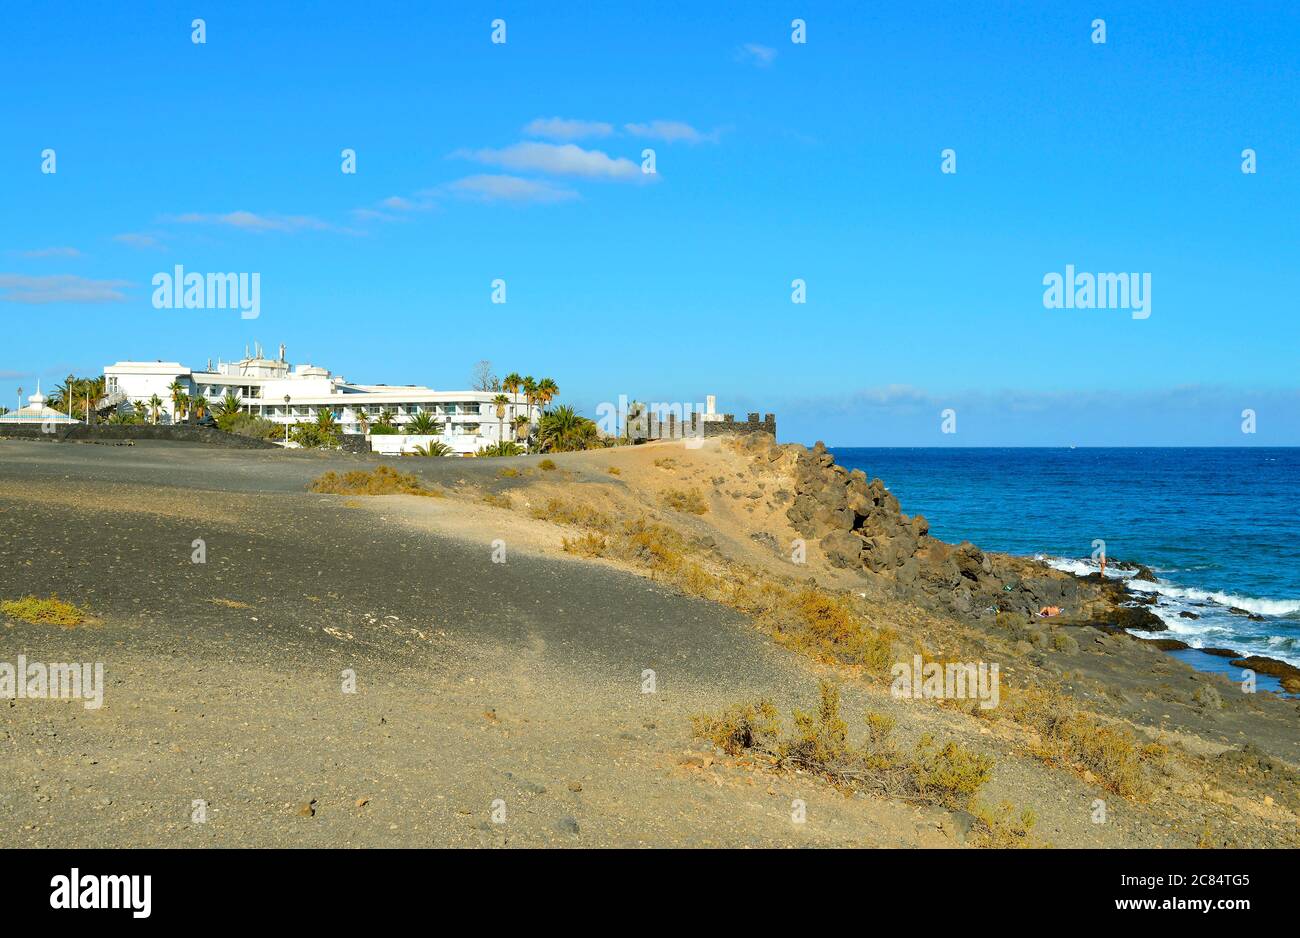 Puerto del Carmen coast in Lanzarote a Spanish island in the Canary Islands Stock Photo